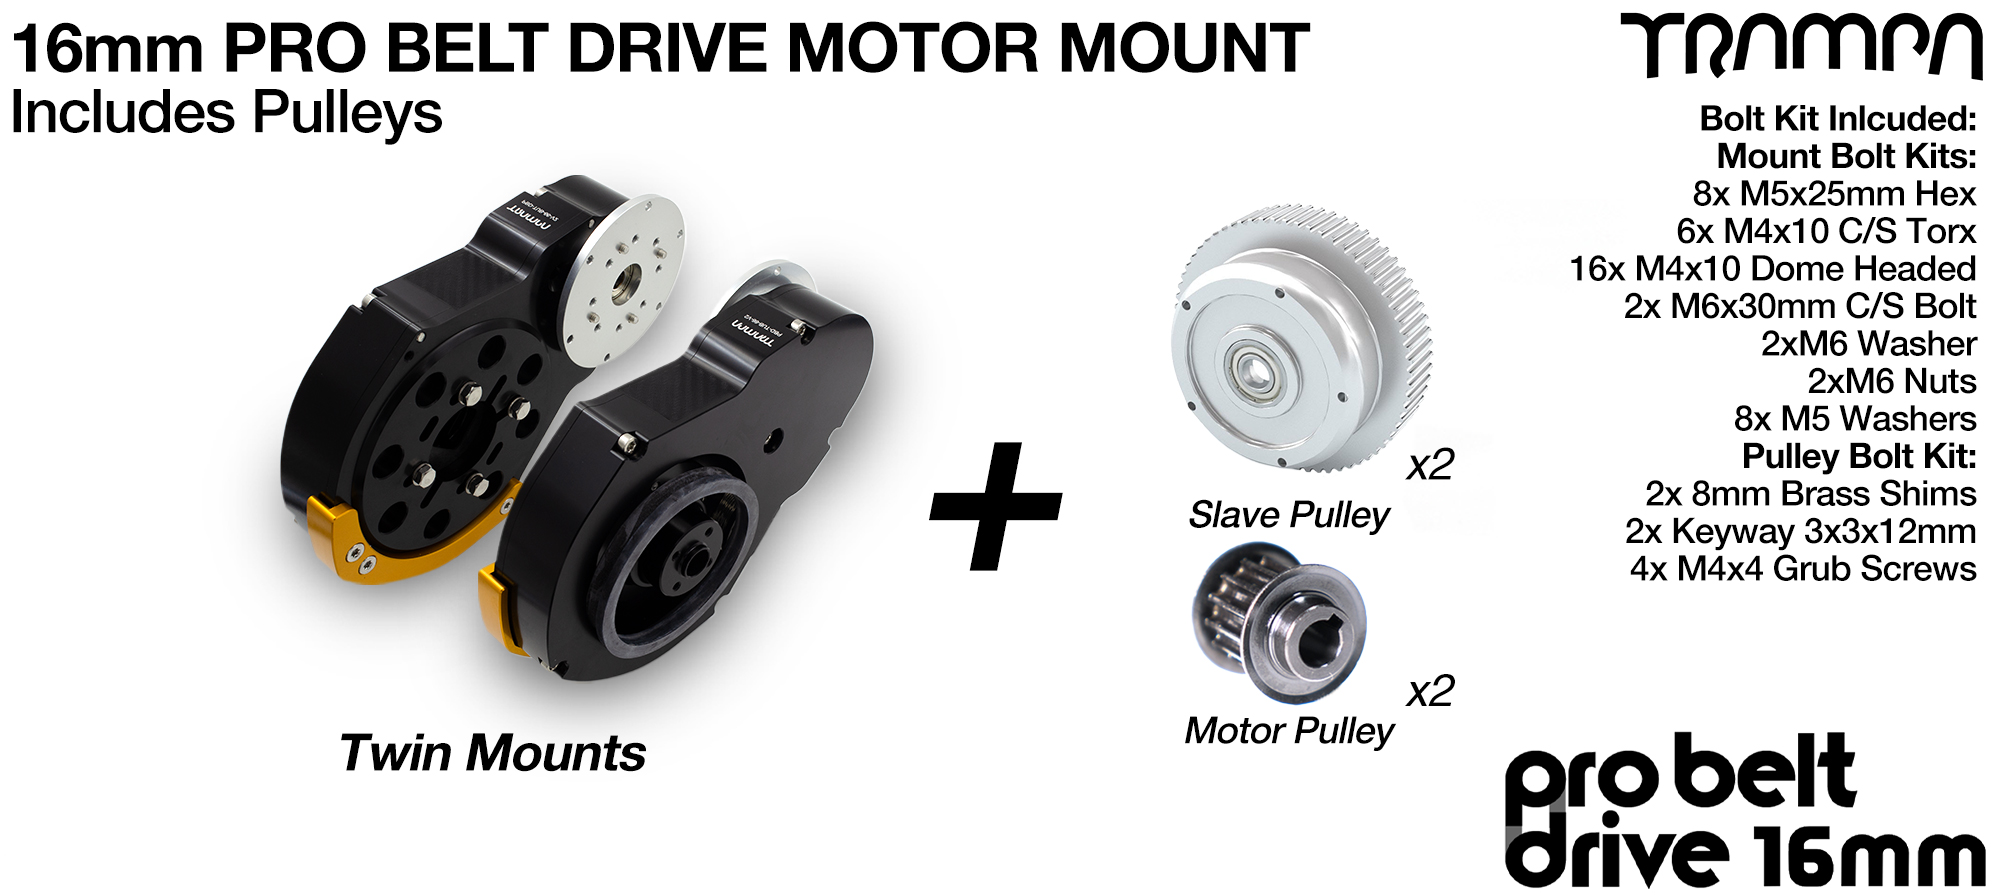 16mm PRO BELT DRIVE Motor Mounts with PULLEYS - NO Motors & NO Filters